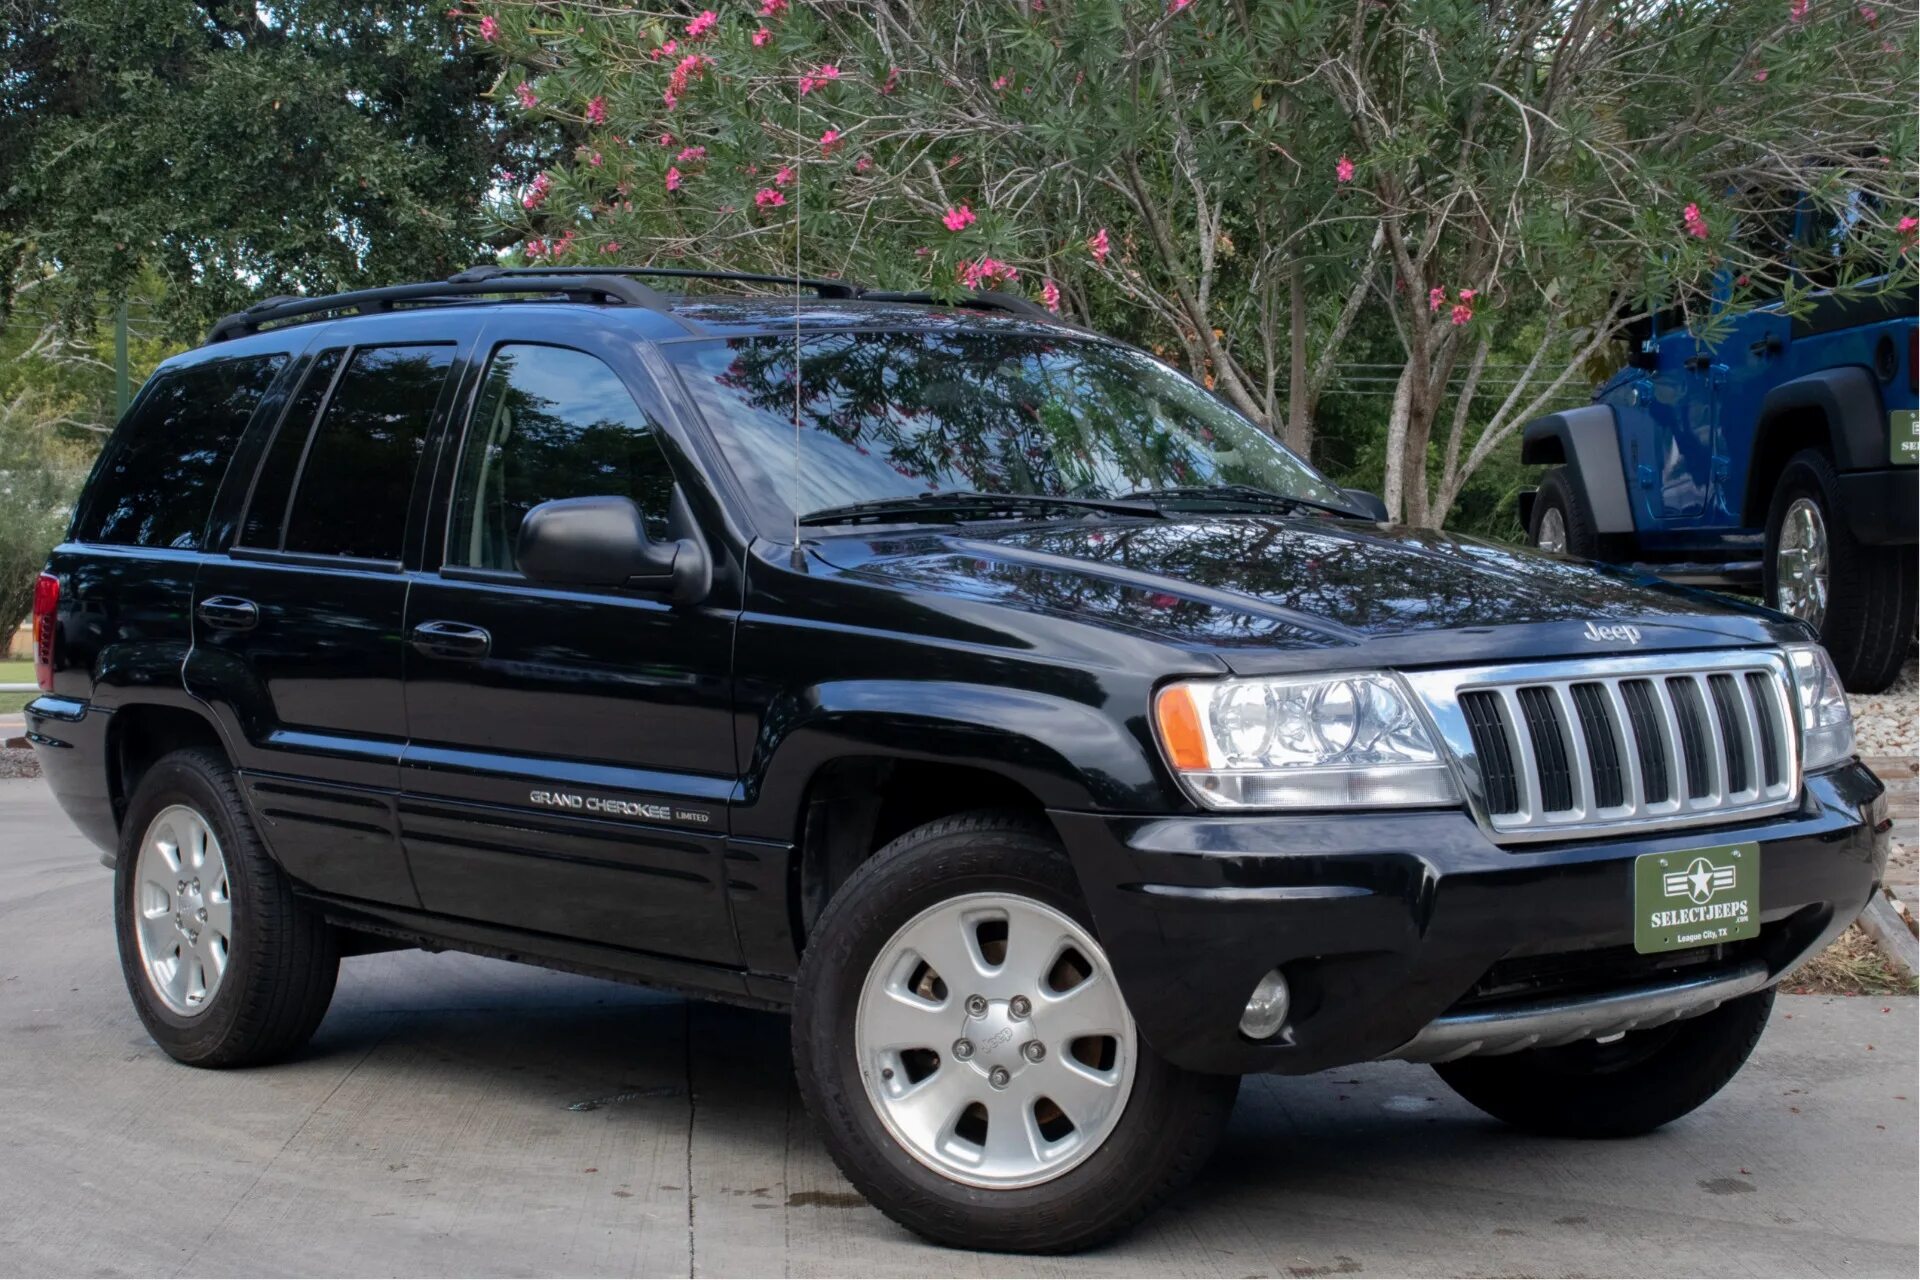 Cherokee limited. Jeep Grand Cherokee Limited. Jeep Grand Cherokee Limited 2004. Jeep Grand Cherokee 2004 черный. Jeep Grand Cherokee 200.